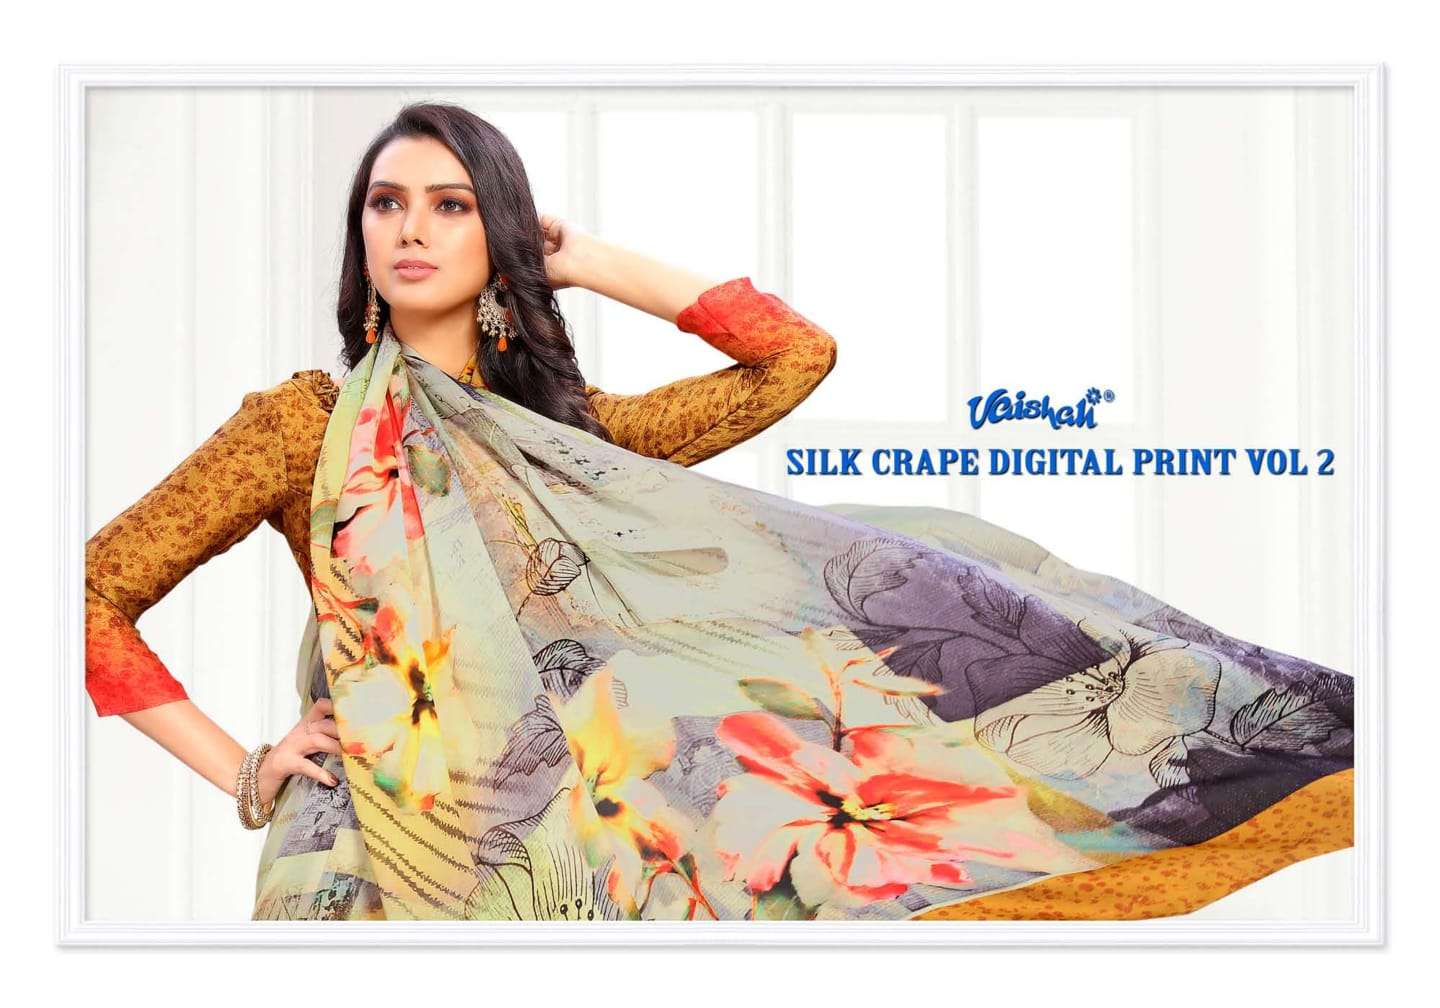 silk crape digital print vol 2 by vaishali printed designer sarees